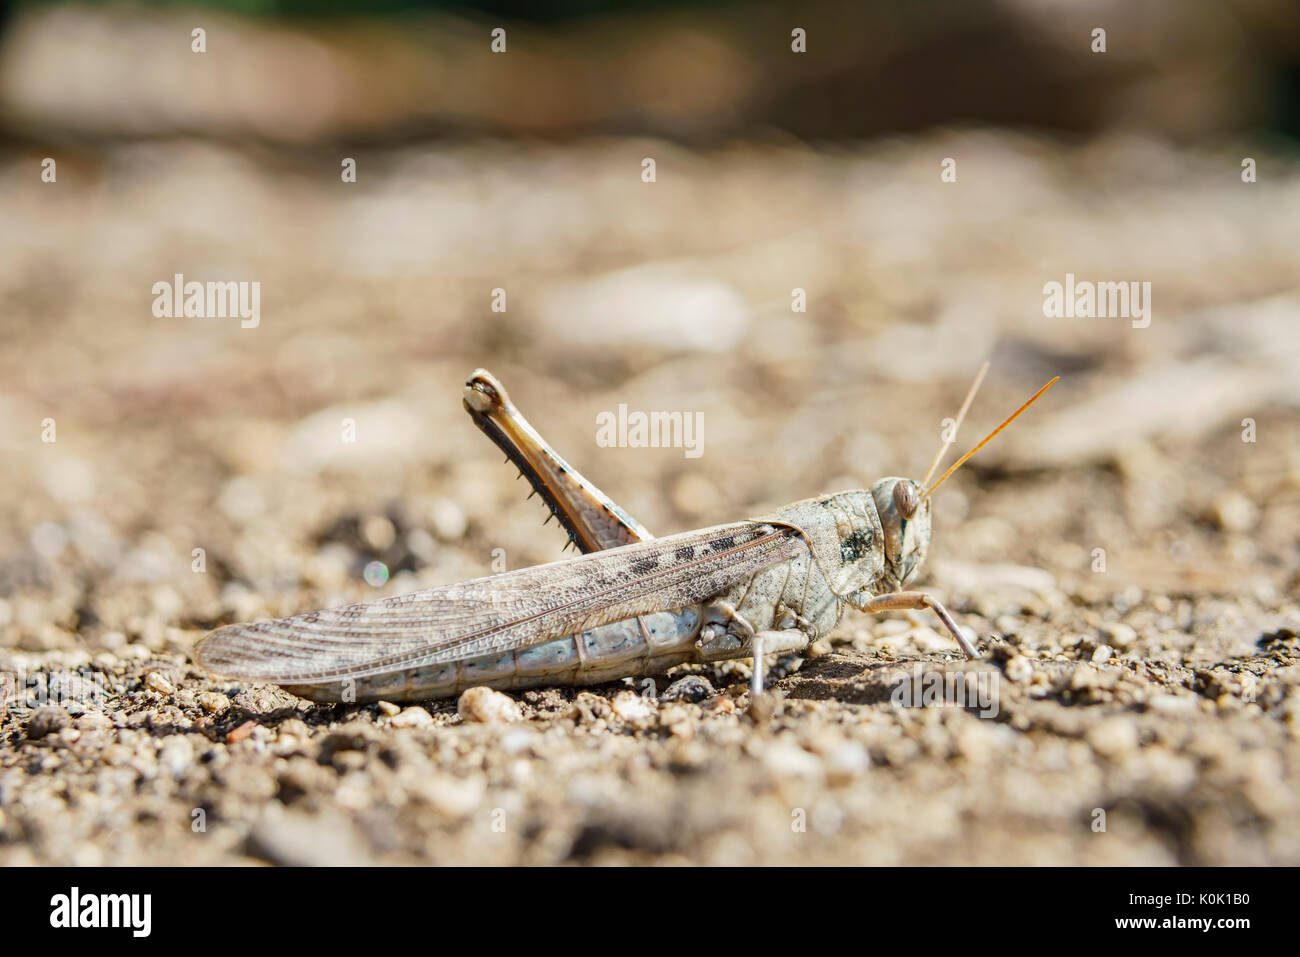 One legged brown grasshopper sitting on the ground, photo took at Los Angeles County Arboretum & Botanic Garden Stock Photo